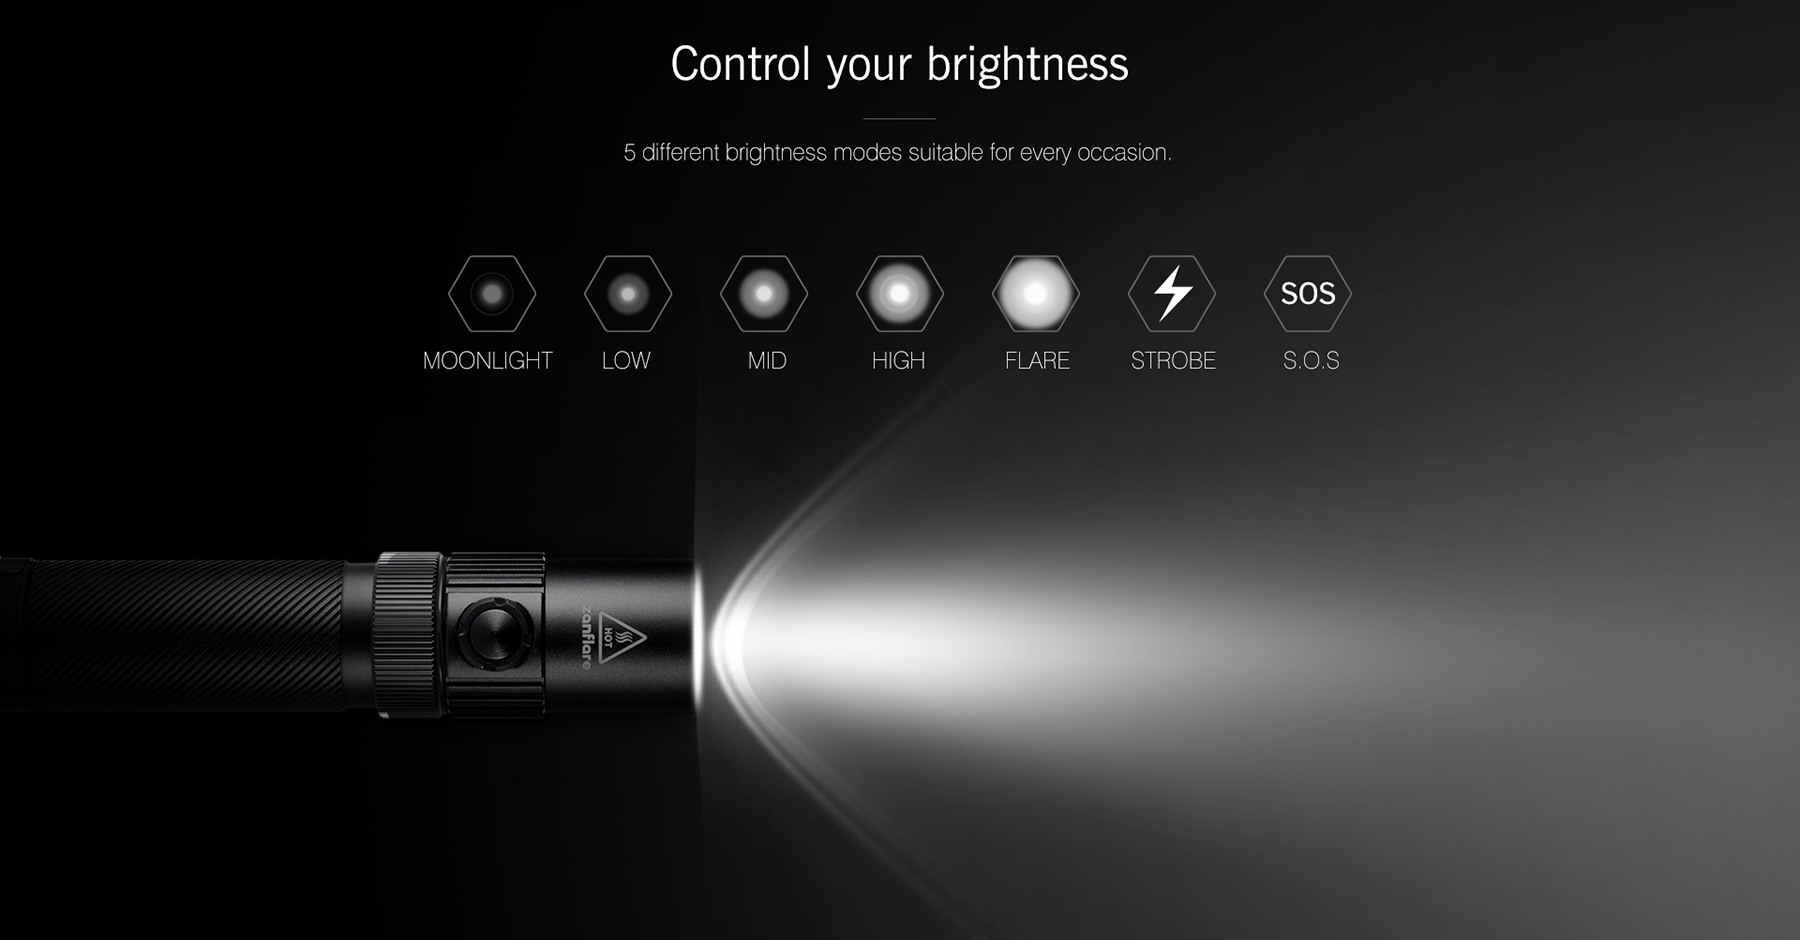 zanflare F1 Cree XPL V6 1240Lm Rechargeable LED Flashlight